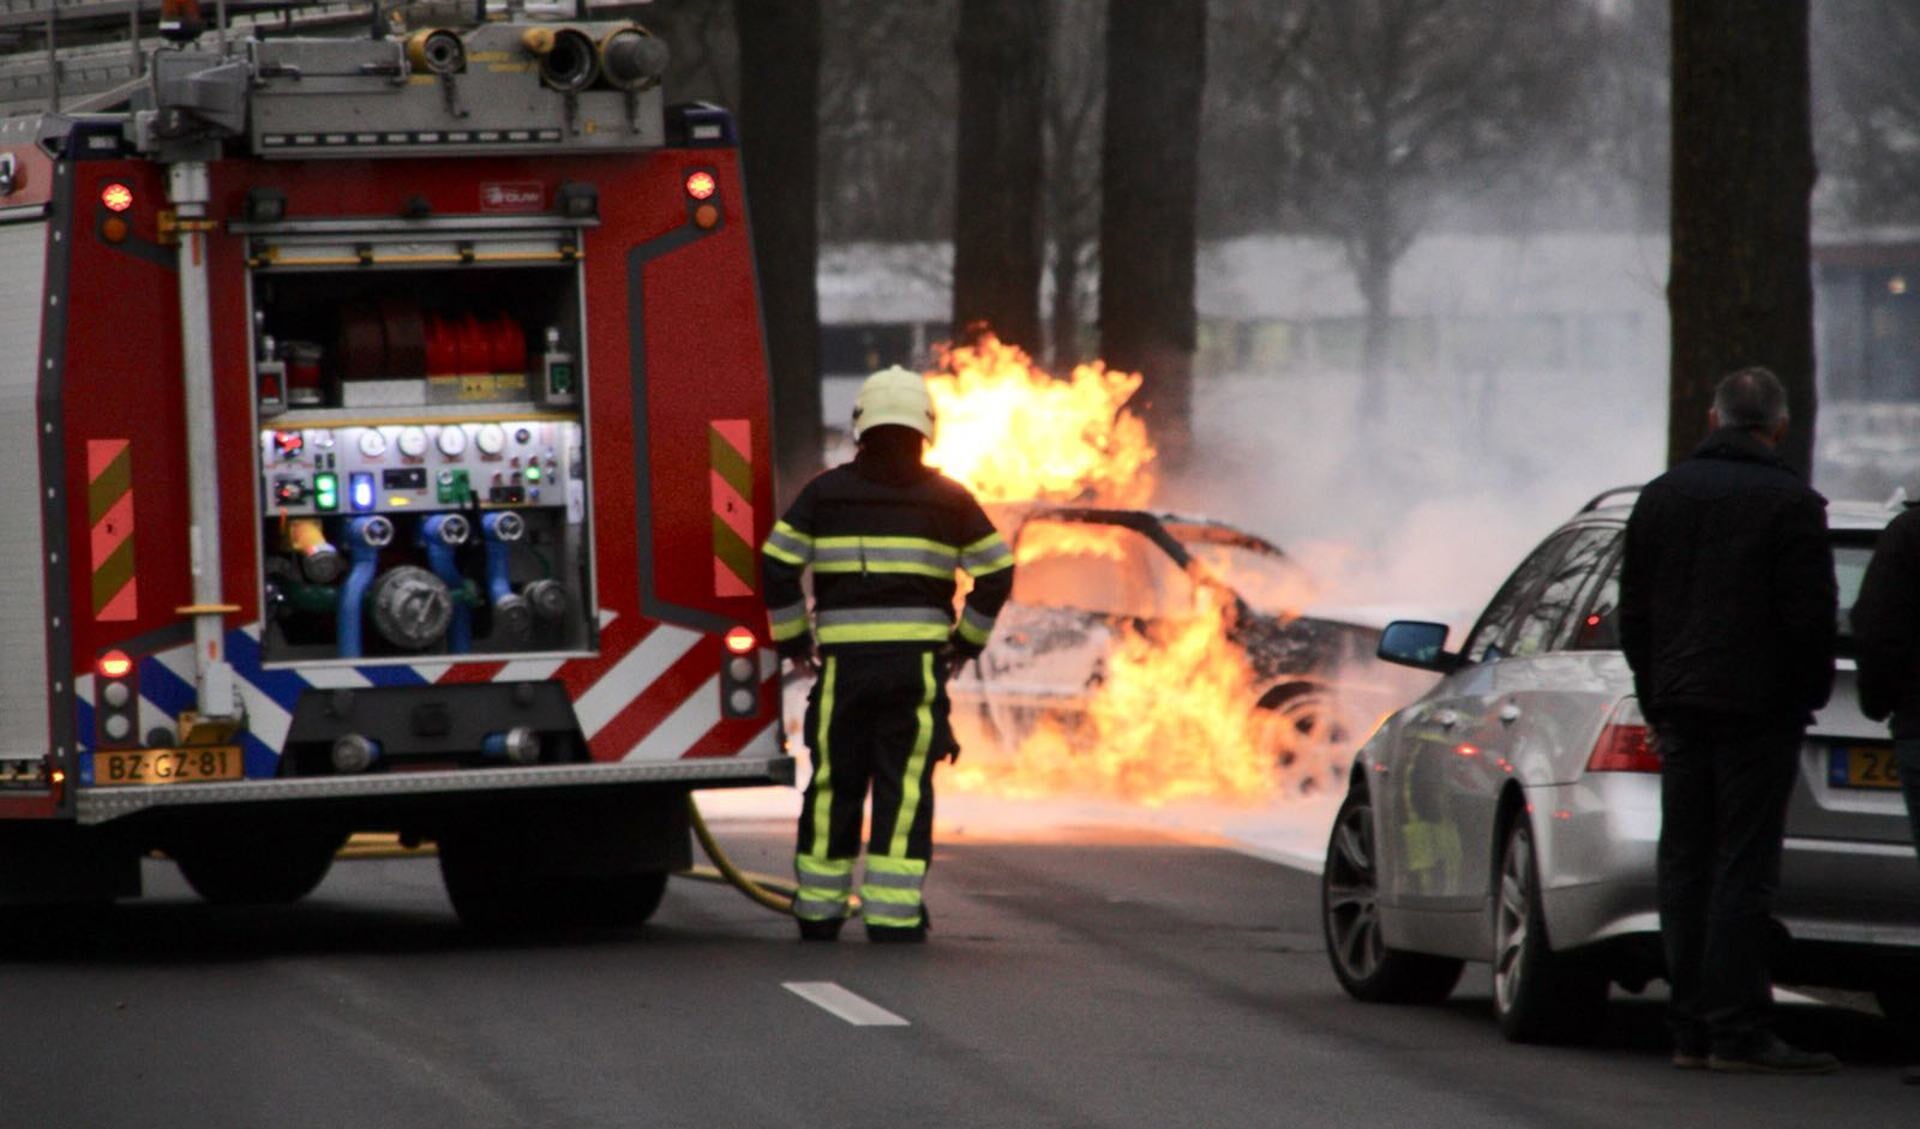 Na de botsing vloog de auto in brand.